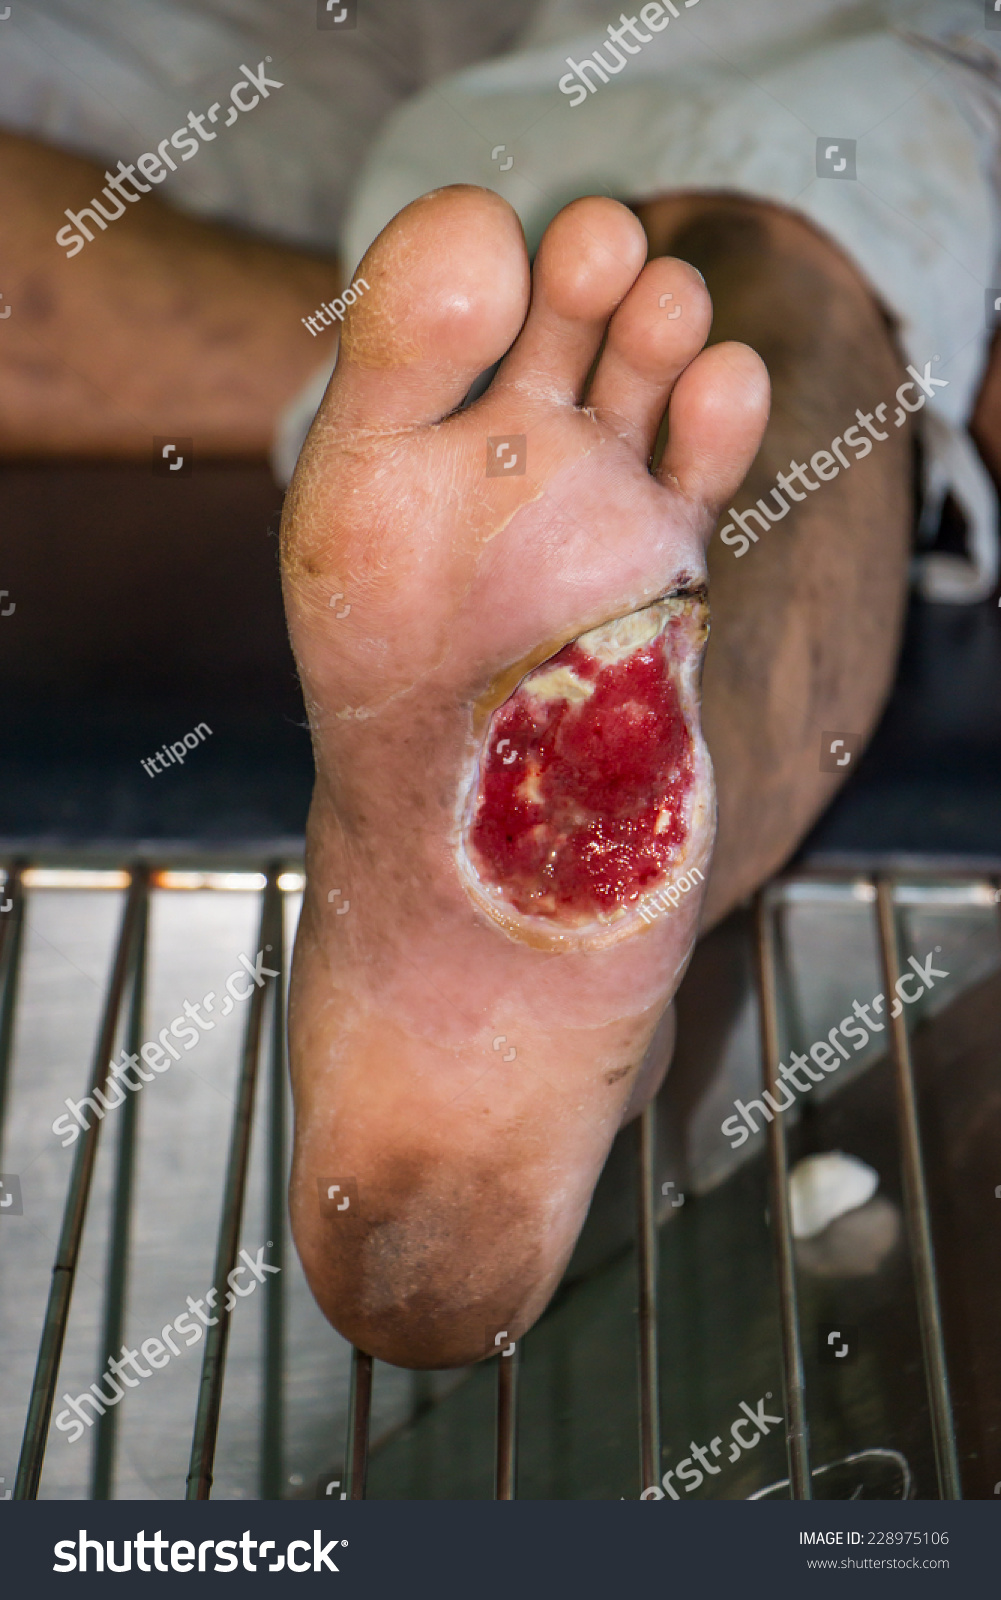 Wound Diabetic Foot Stock Photo 228975106 - Shutterstock